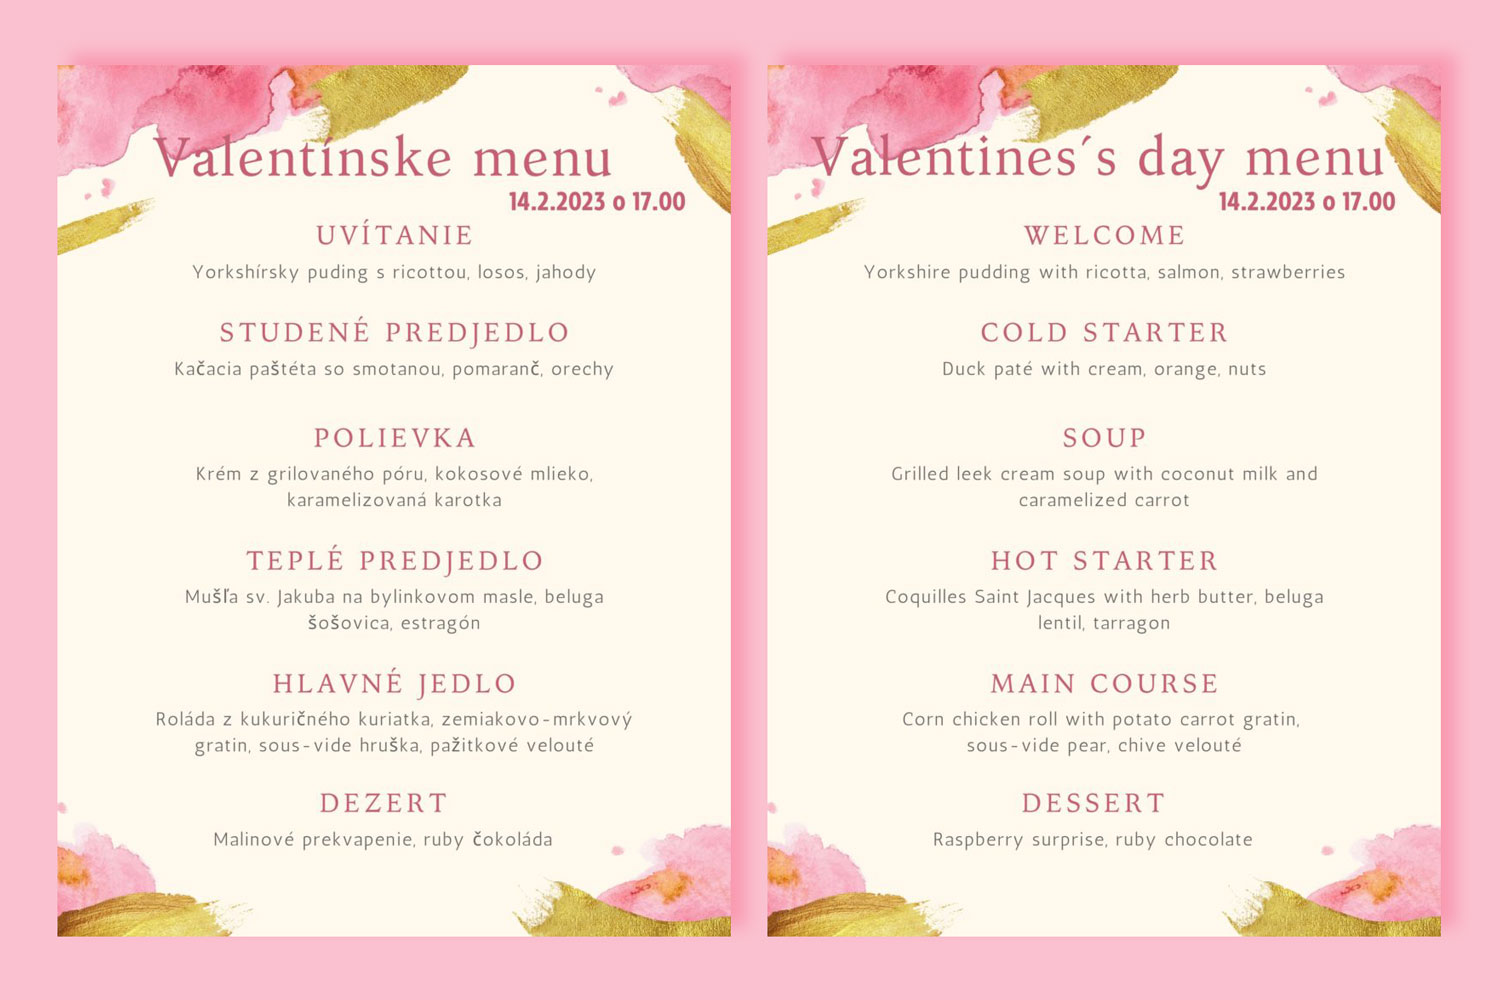 Valentinske menu